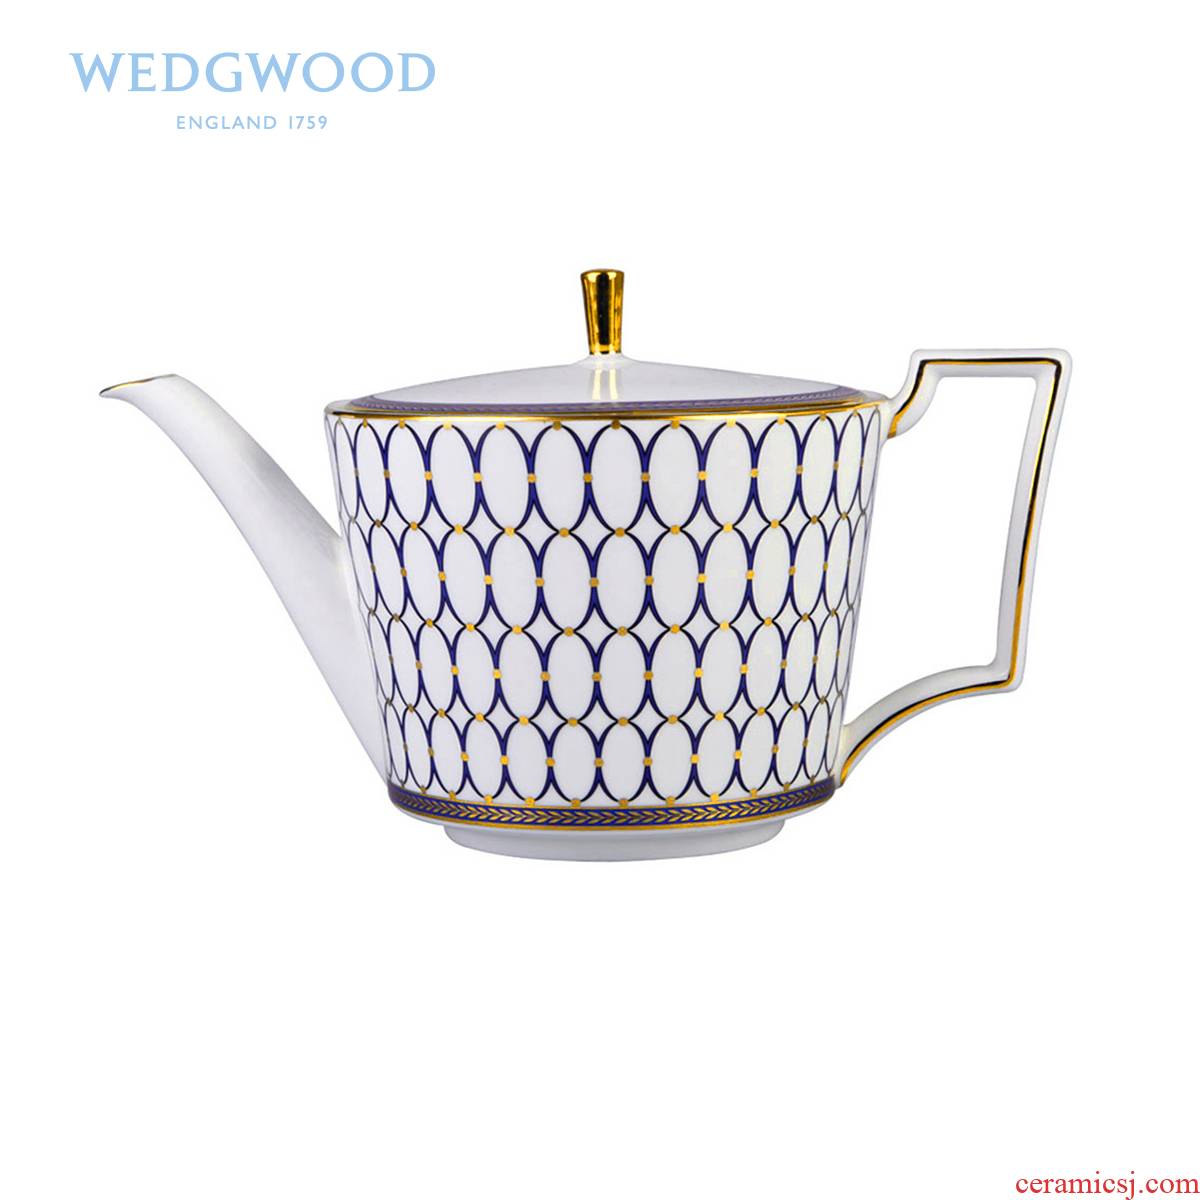 Wedgwood waterford Wedgwood Renaissance Gold powders ipads in China tea/coffee pot